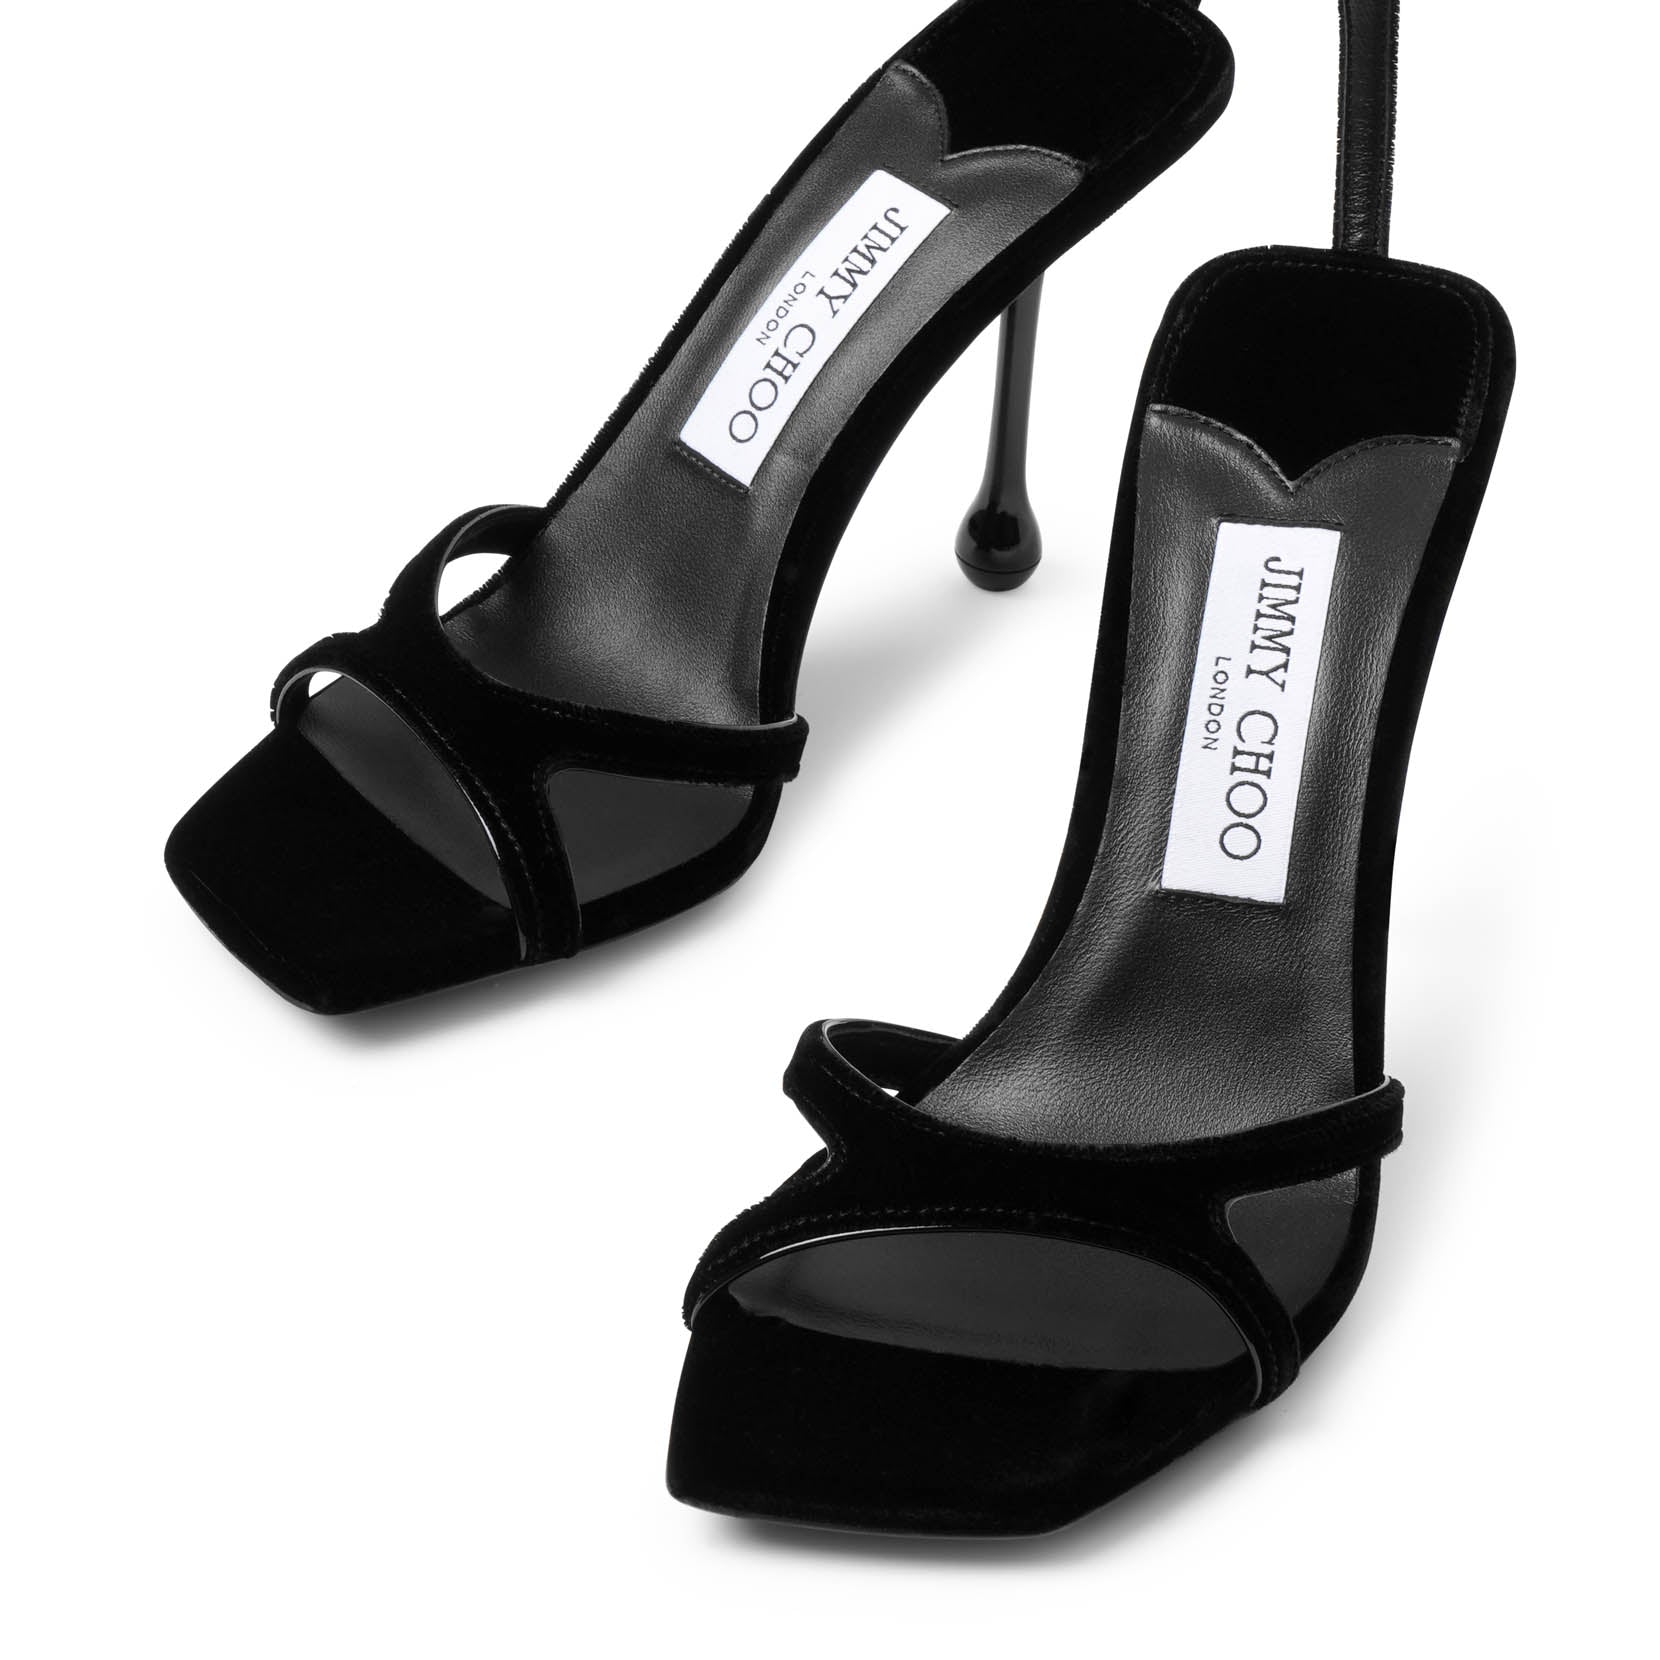 Ixia 95 black velvet sandals